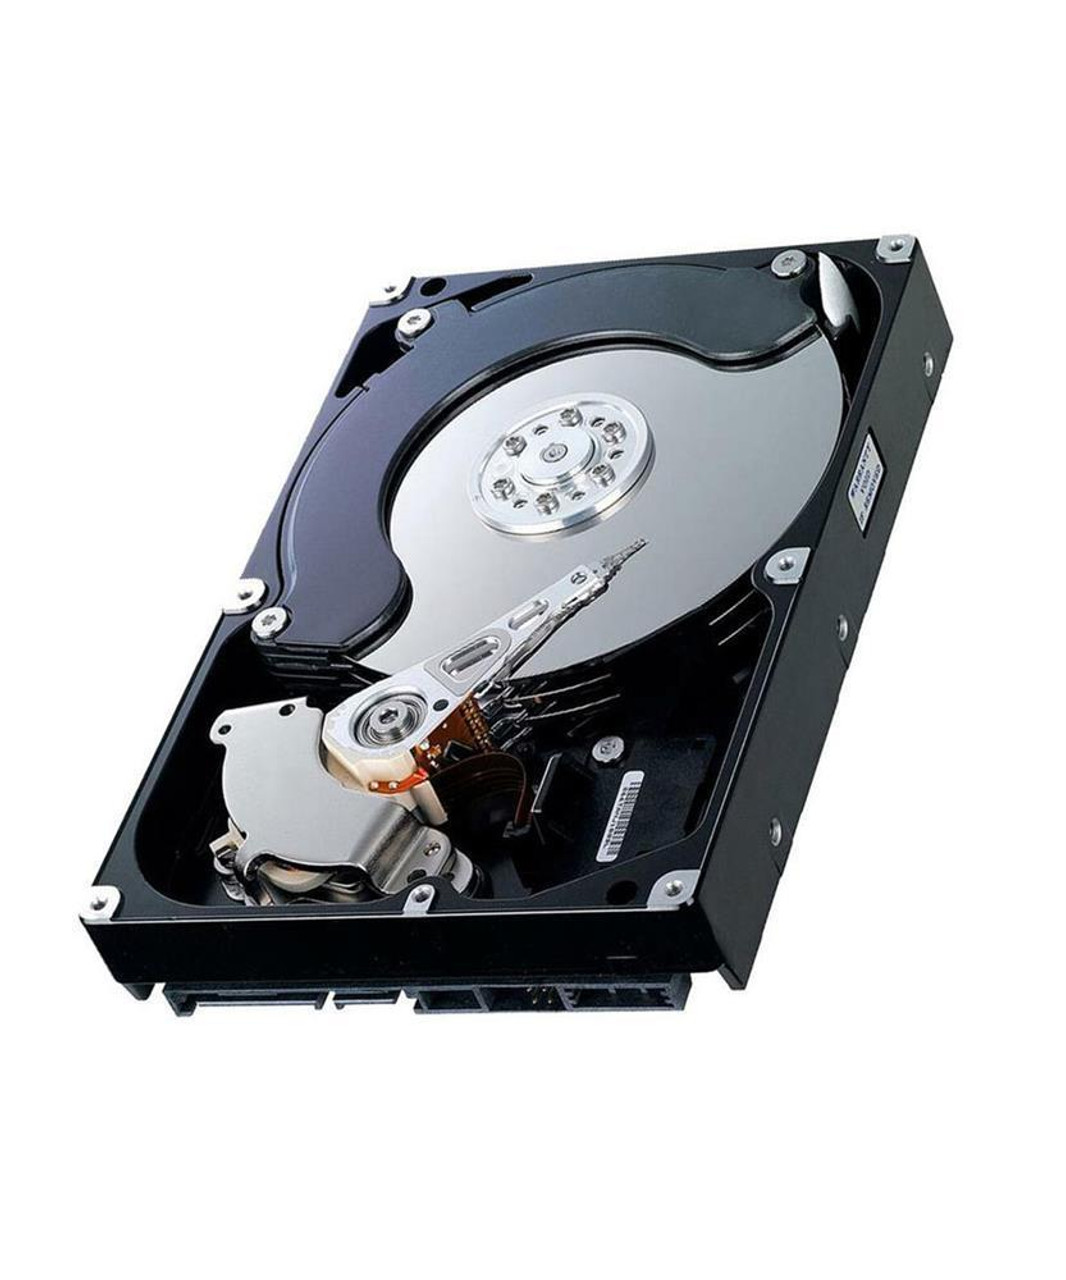 Western Digital Caviar 200GB 7200RPM ATA-100 8MB Cache 3.5-inch Internal Hard Drive (20-Pack)